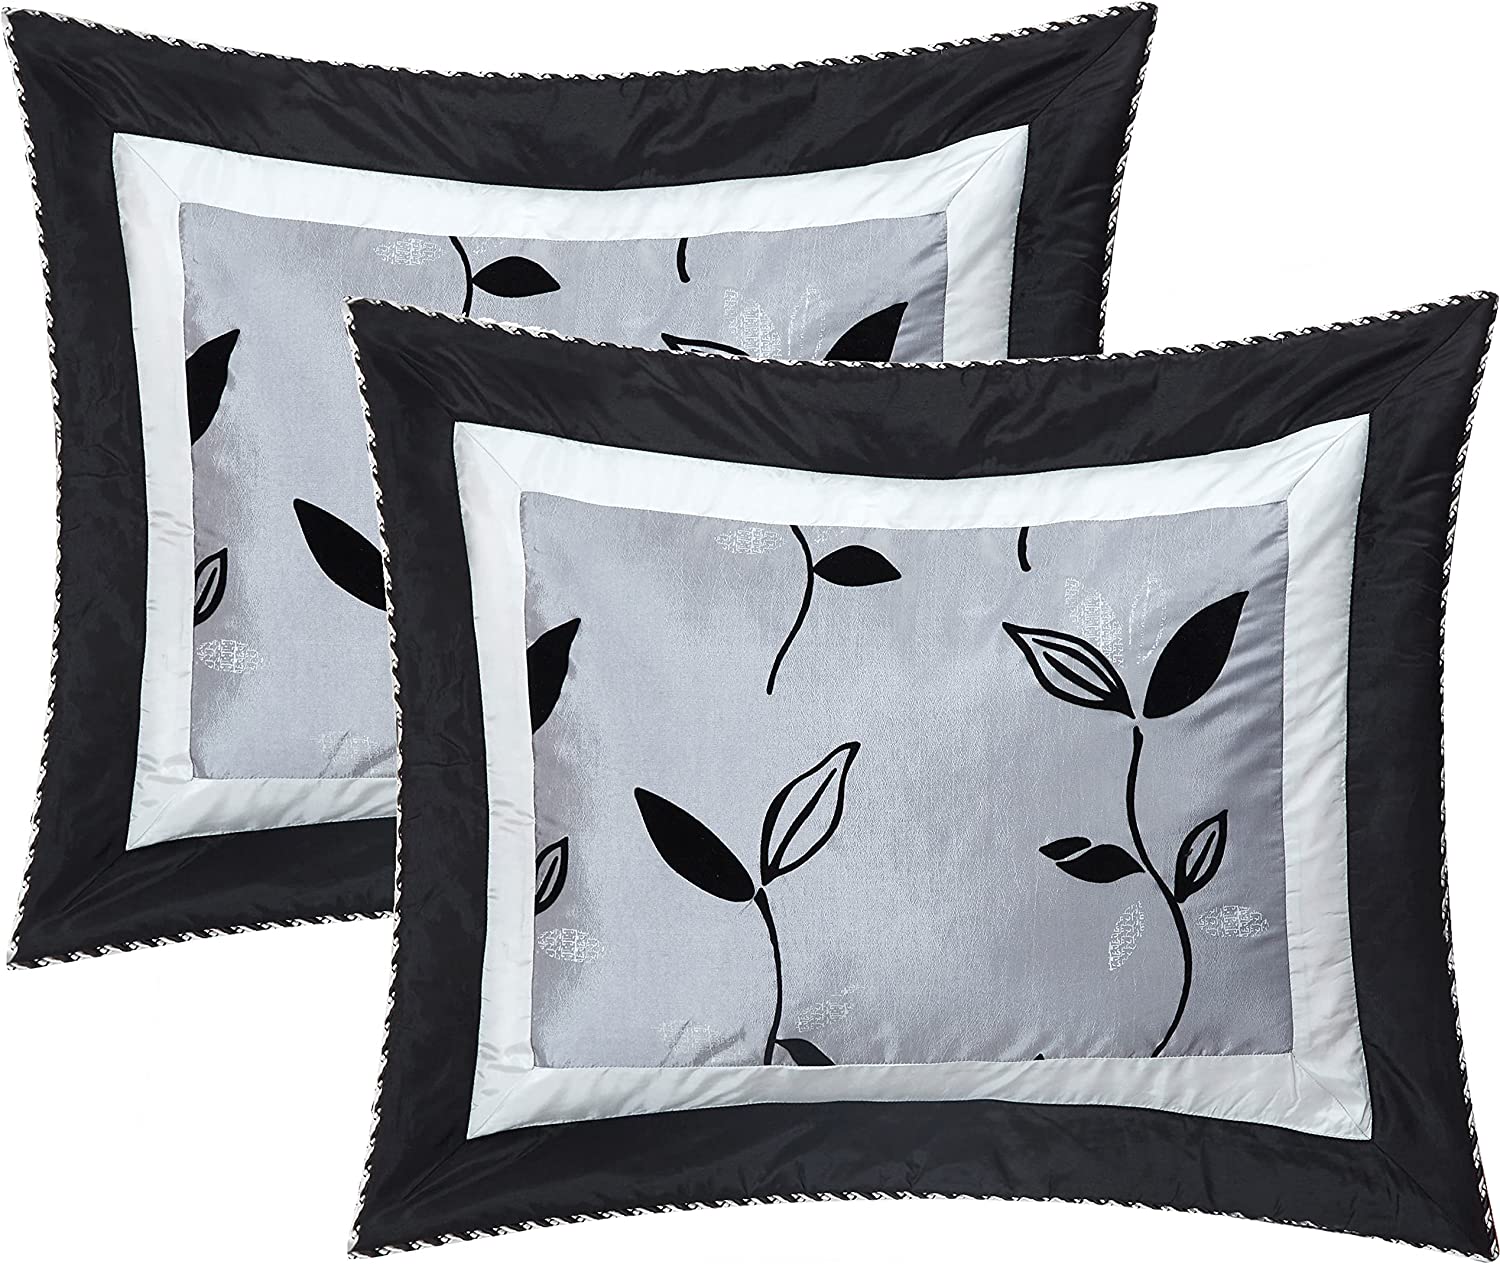 Pastora 7 Piece Black, Silver, and White Embellished Comforter Set